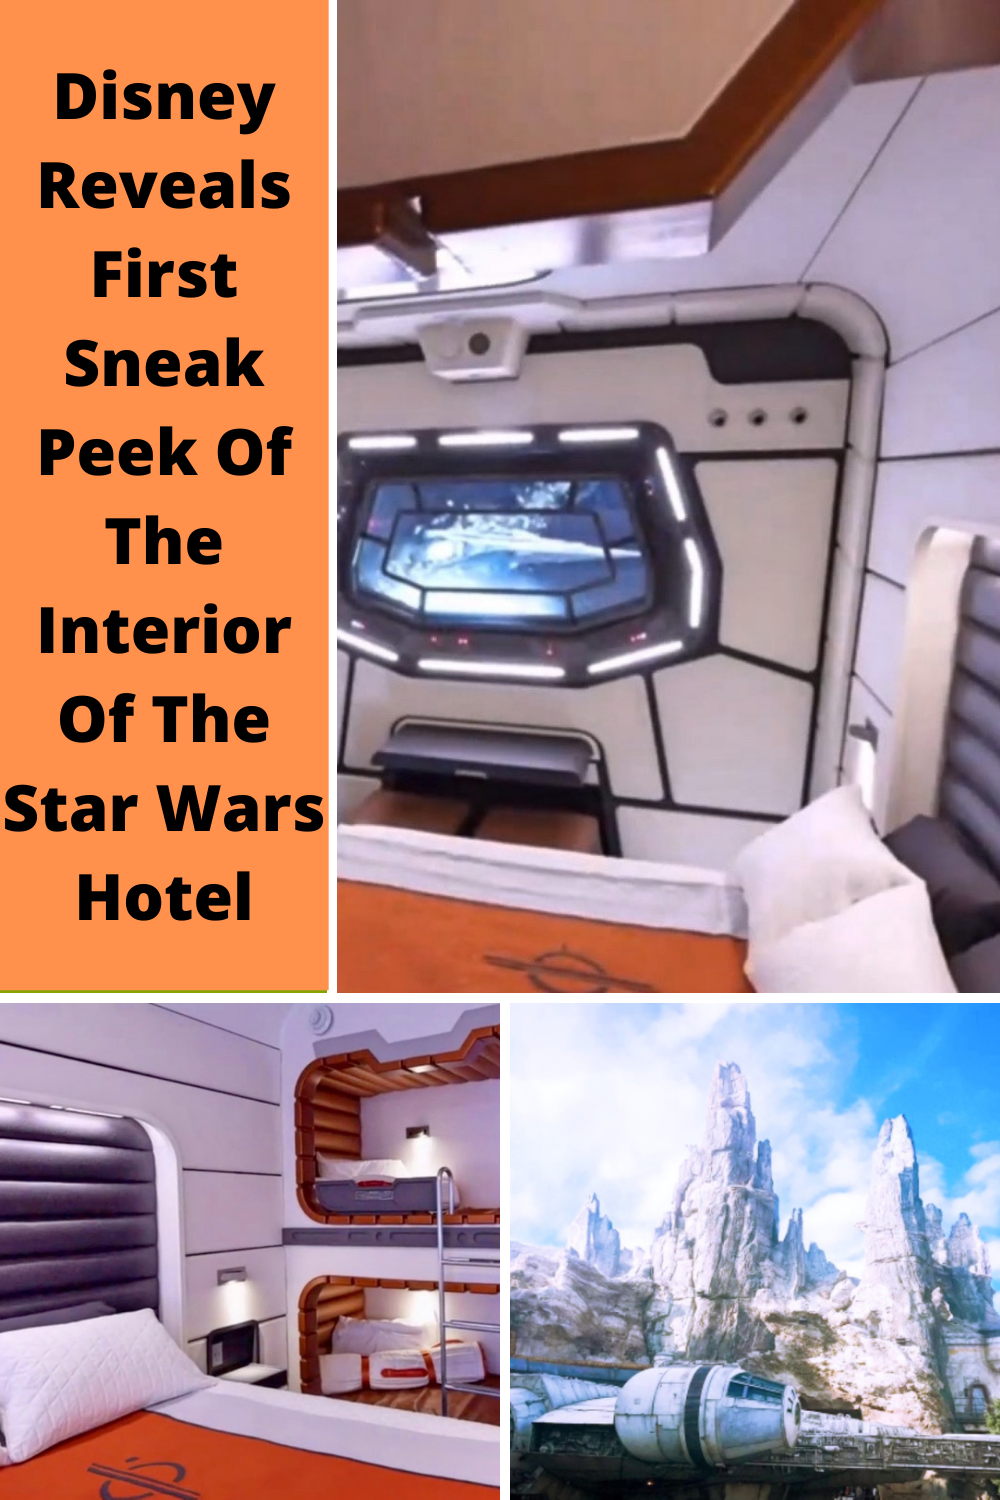 Disney Reveals First Sneak Peek Of The Interior Of The Star Wars Hotel